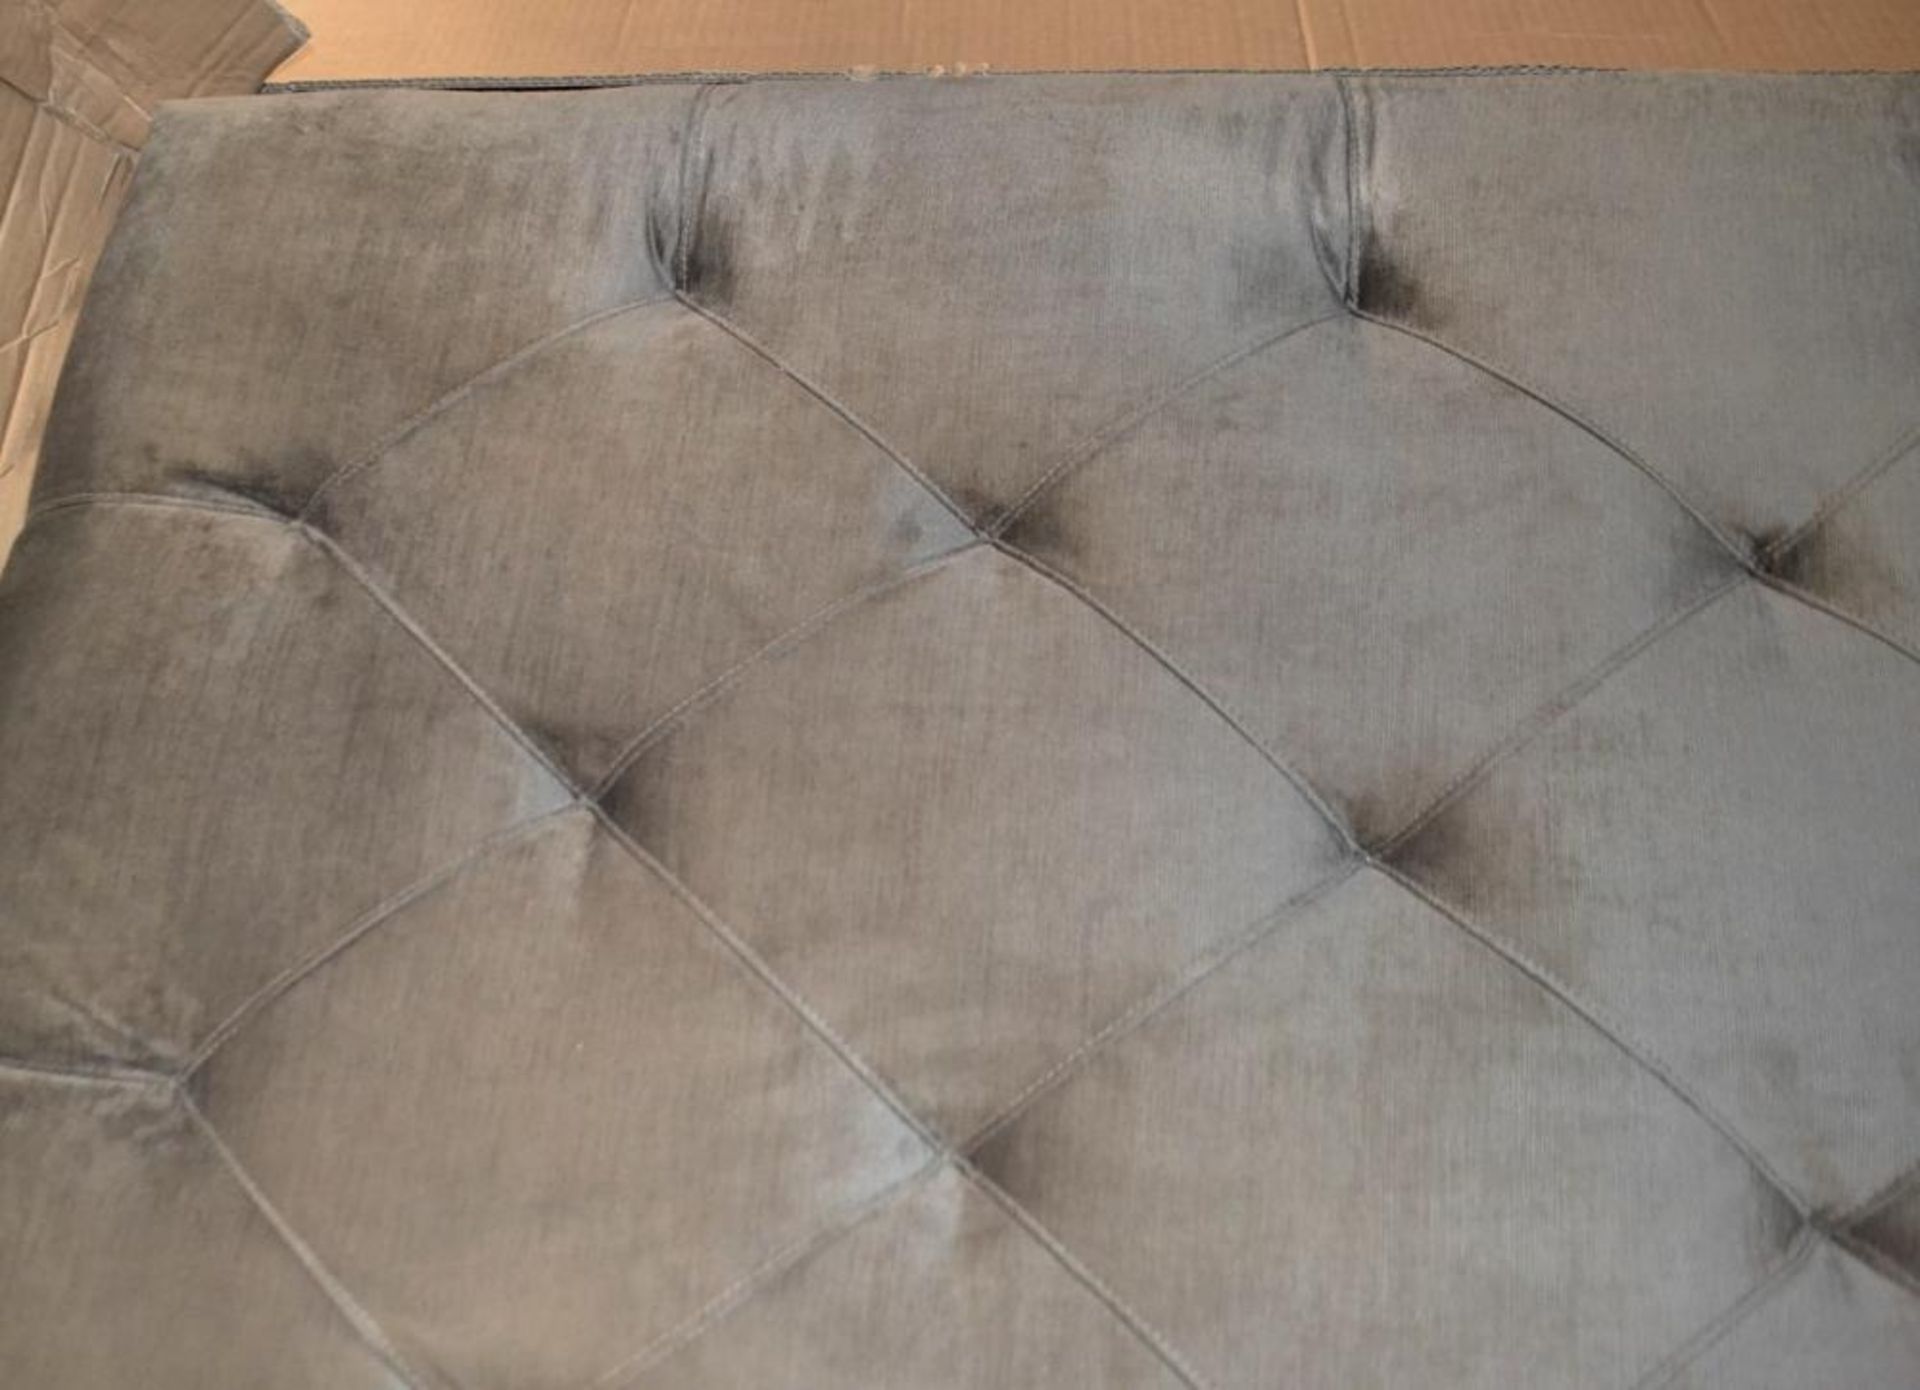 1 x Eichholtz 'Cesare ' Chesterfield-Inspired Upholstered Headboard In A Granite Grey Velvet - Dime - Image 8 of 10